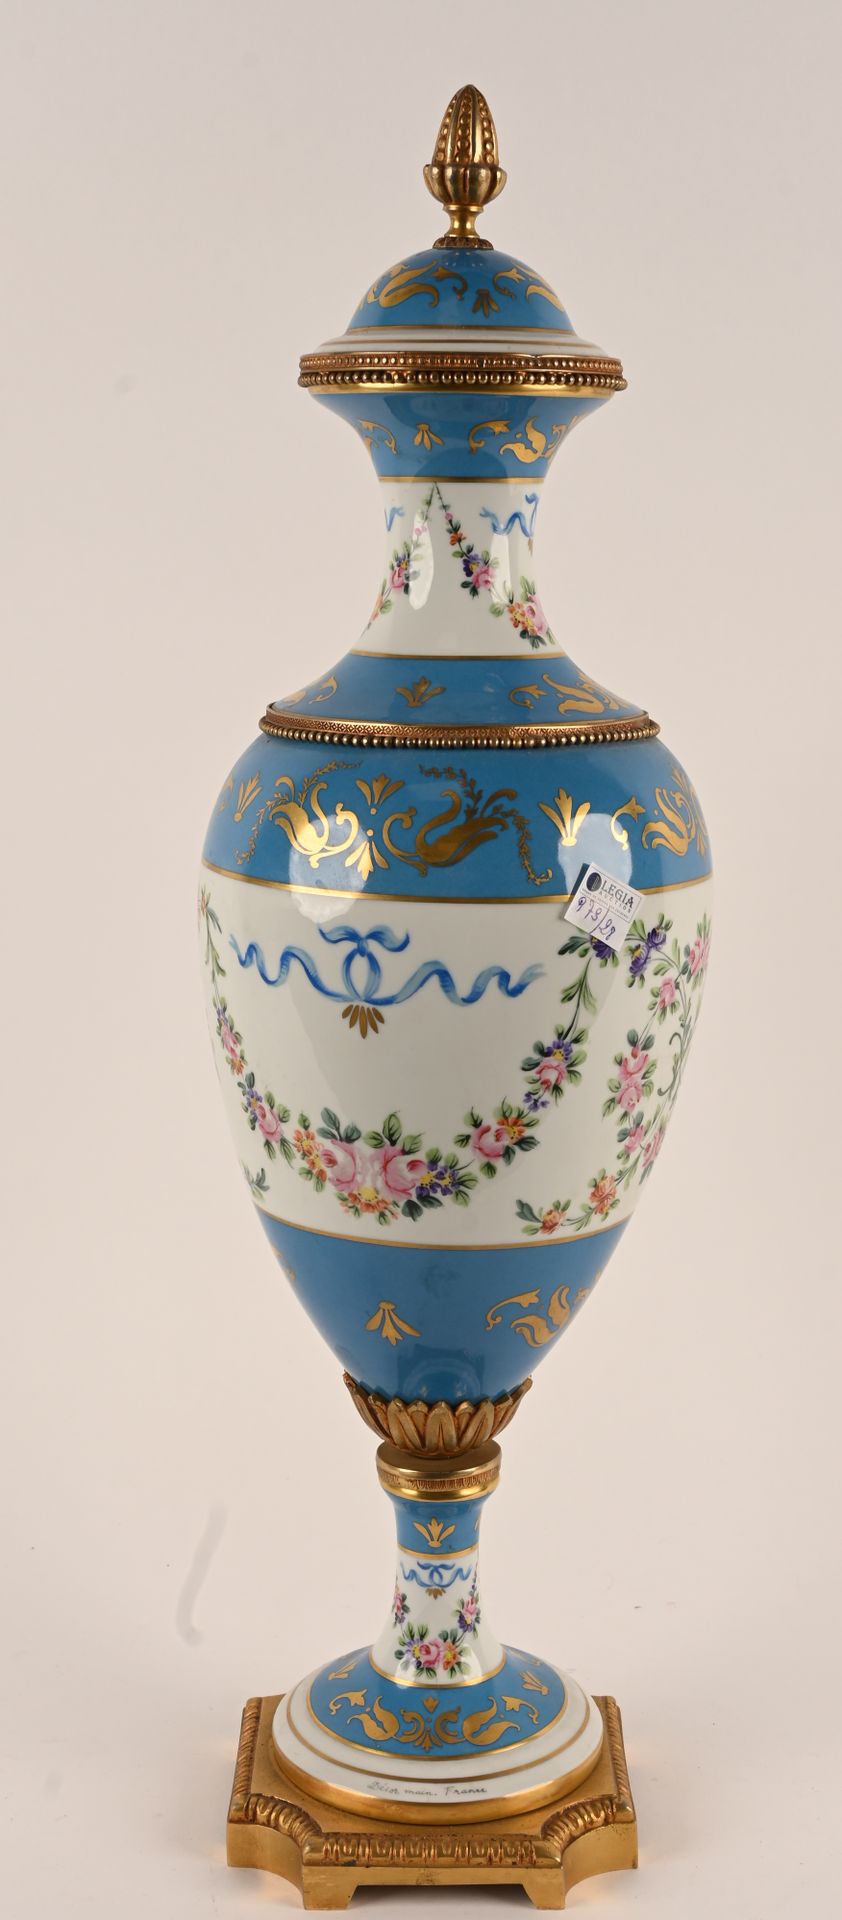 Dans le goût de Sèvres. Dans le goût de Sèvres.
Grand vase couvert en porcelaine&hellip;